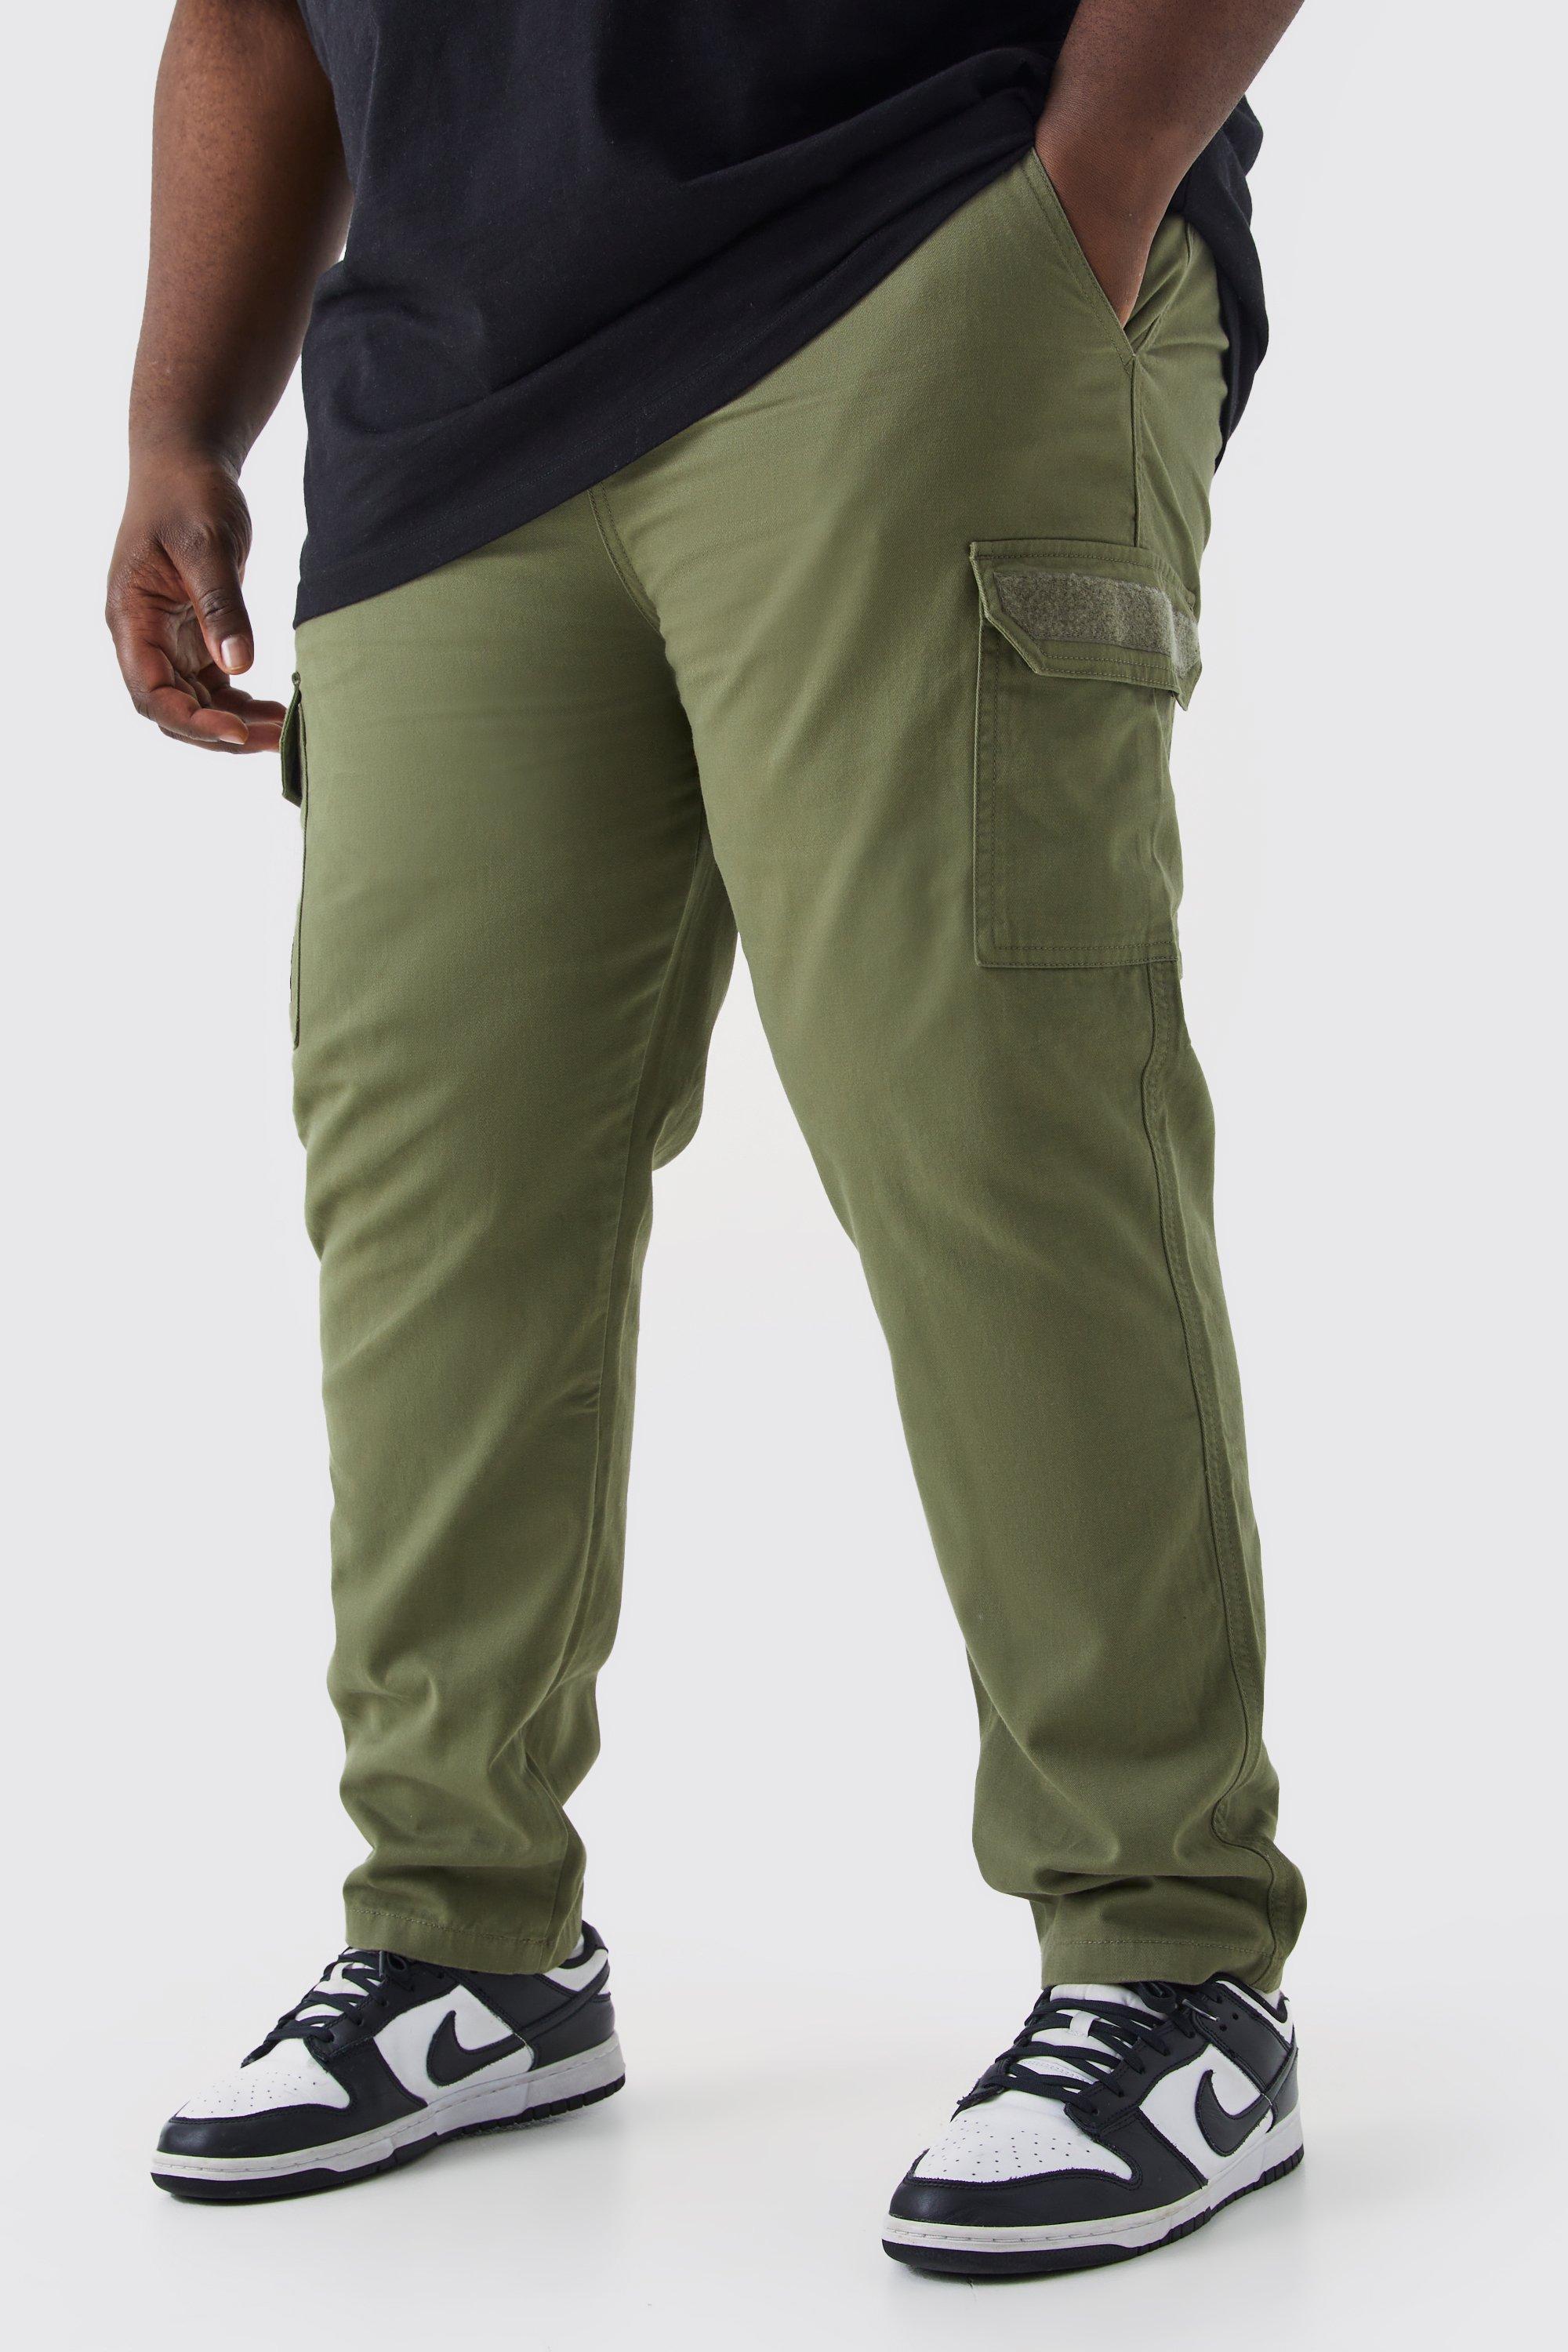 grande taille - pantalon cargo à taille élastiquée homme - kaki - xxl, kaki